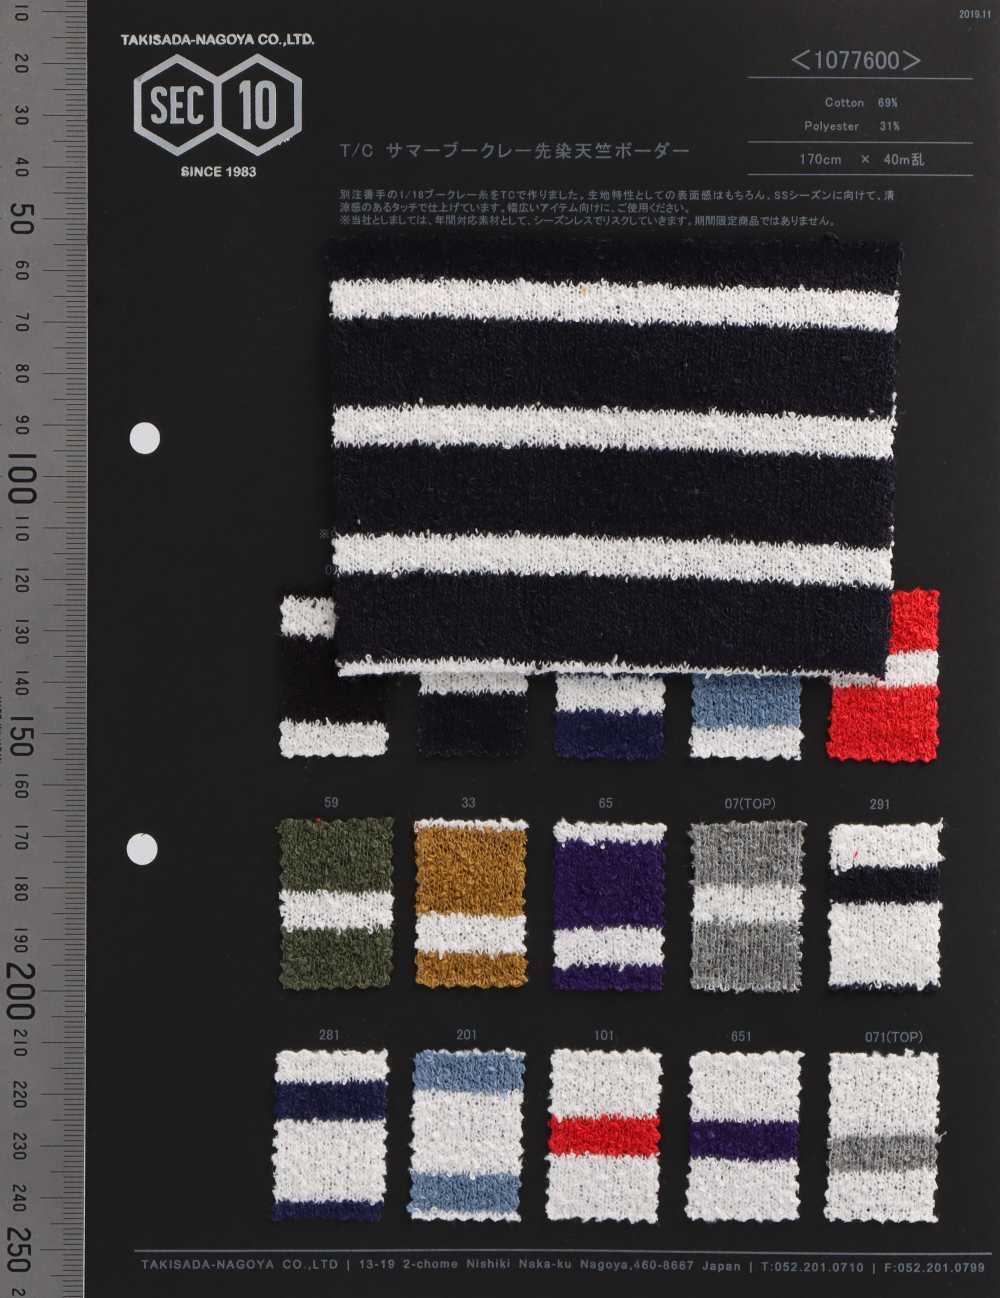 1077600 TC Boucle Jersey De Coton Teint En Fil à Rayures Horizontales[Fabrication De Textile] Takisada Nagoya